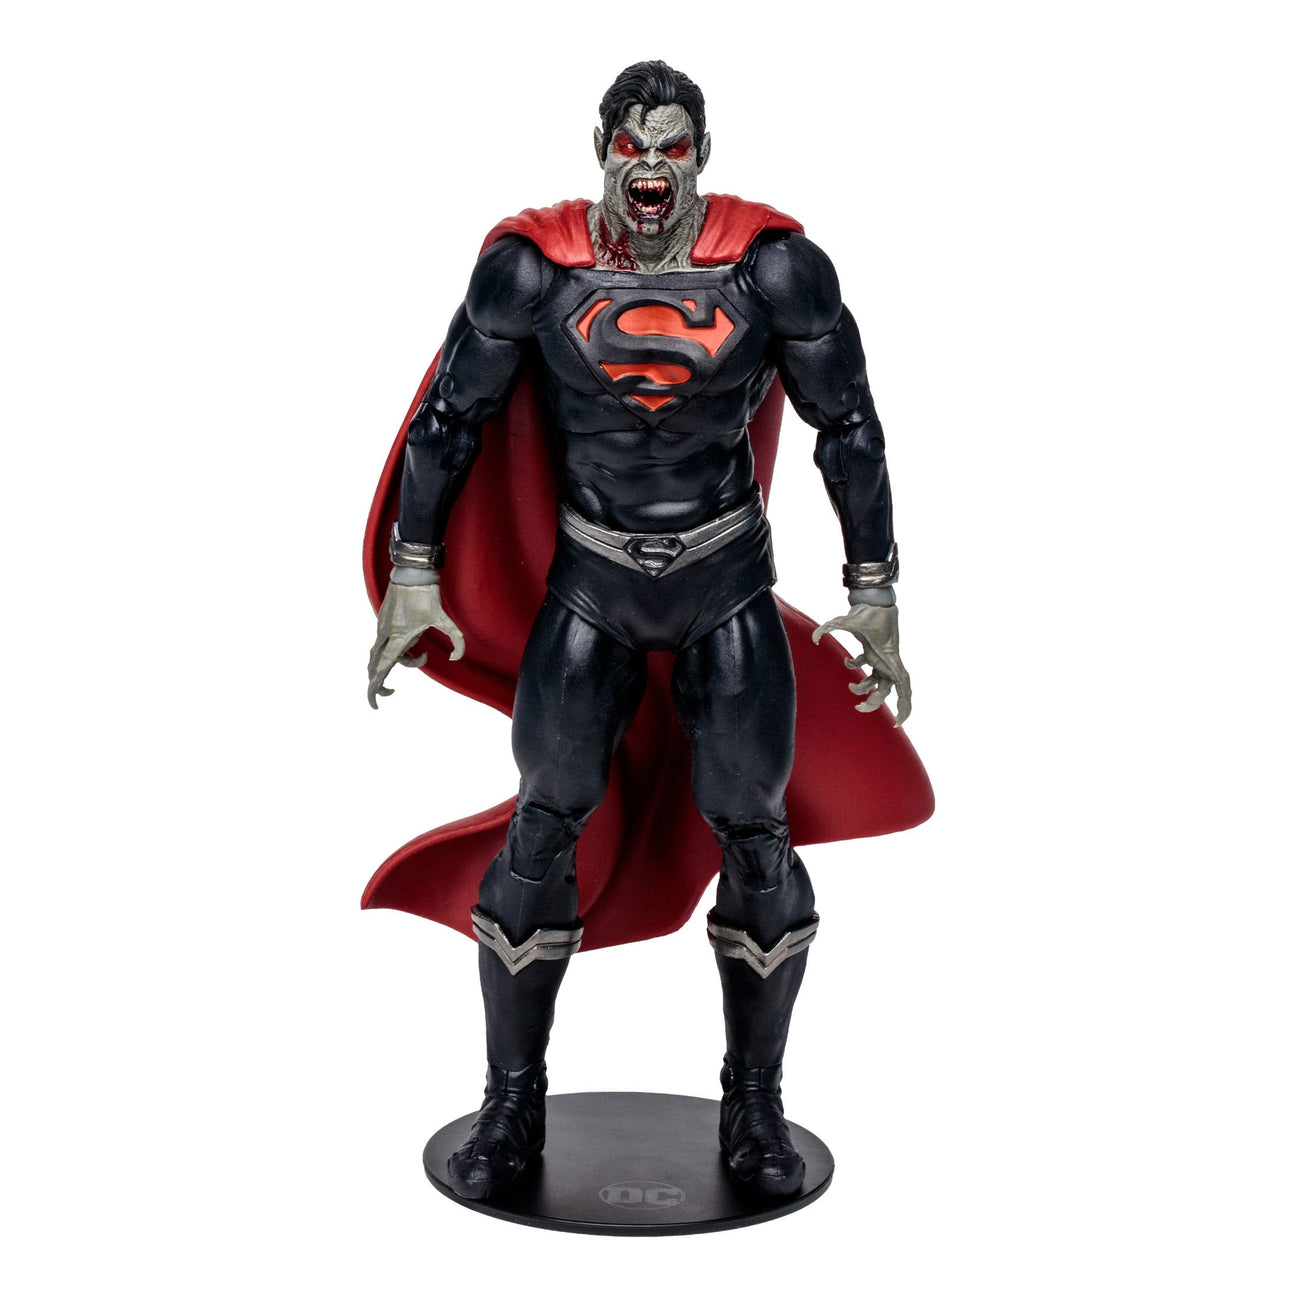 DC Multiverse: Superman (DC VS Vampires, Gold Label)-Actionfiguren-McFarlane Toys-Mighty Underground